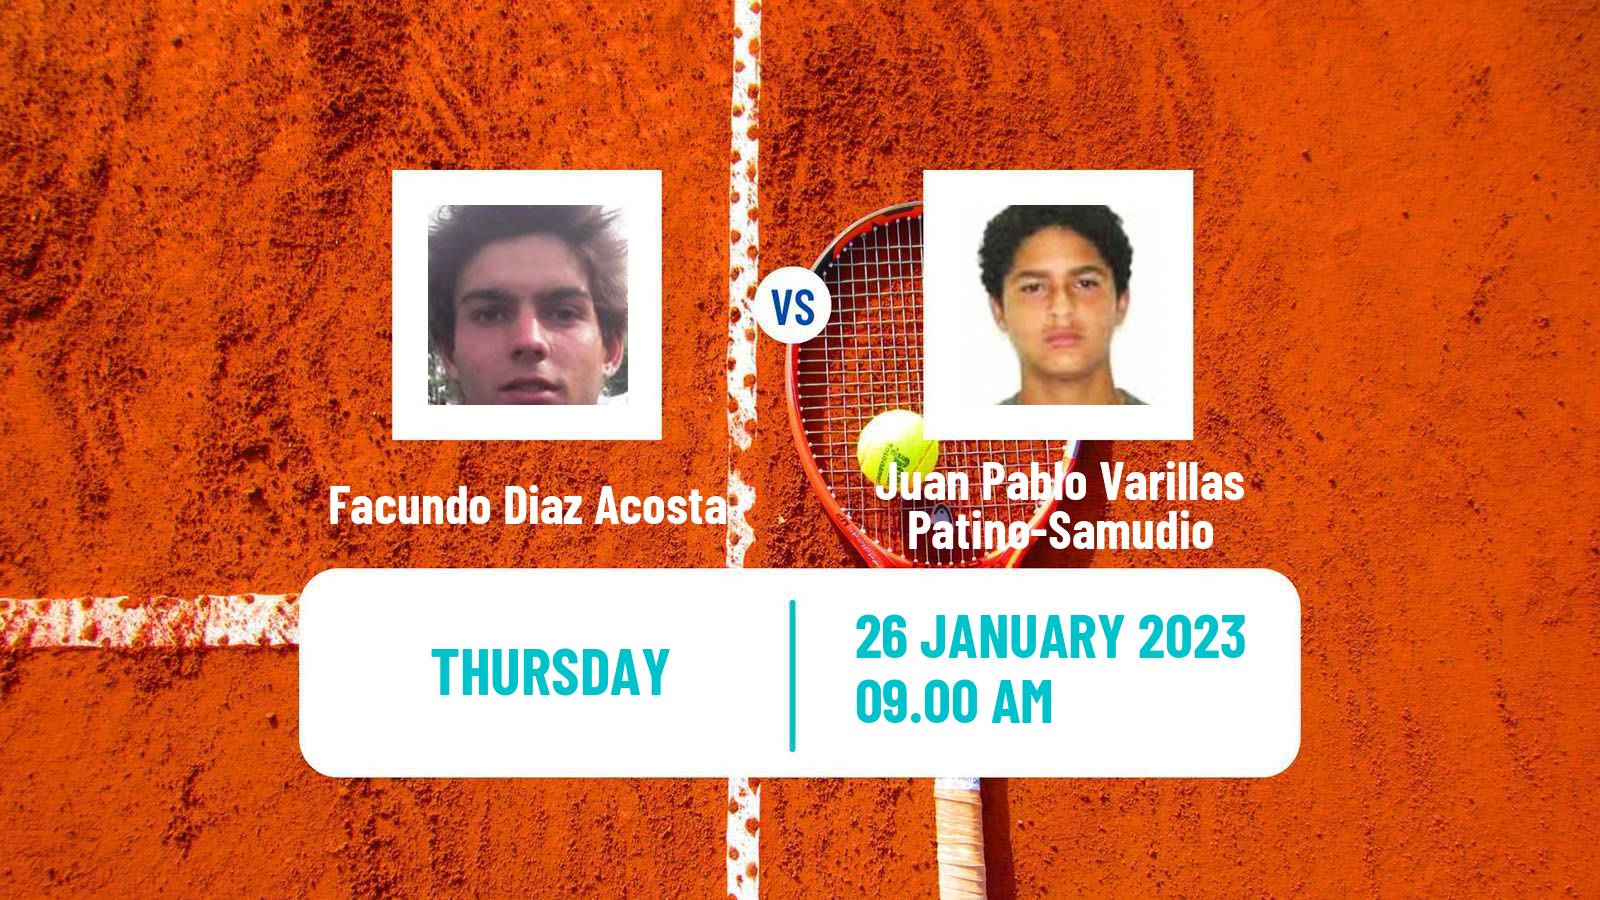 Tennis ATP Challenger Facundo Diaz Acosta - Juan Pablo Varillas Patino-Samudio